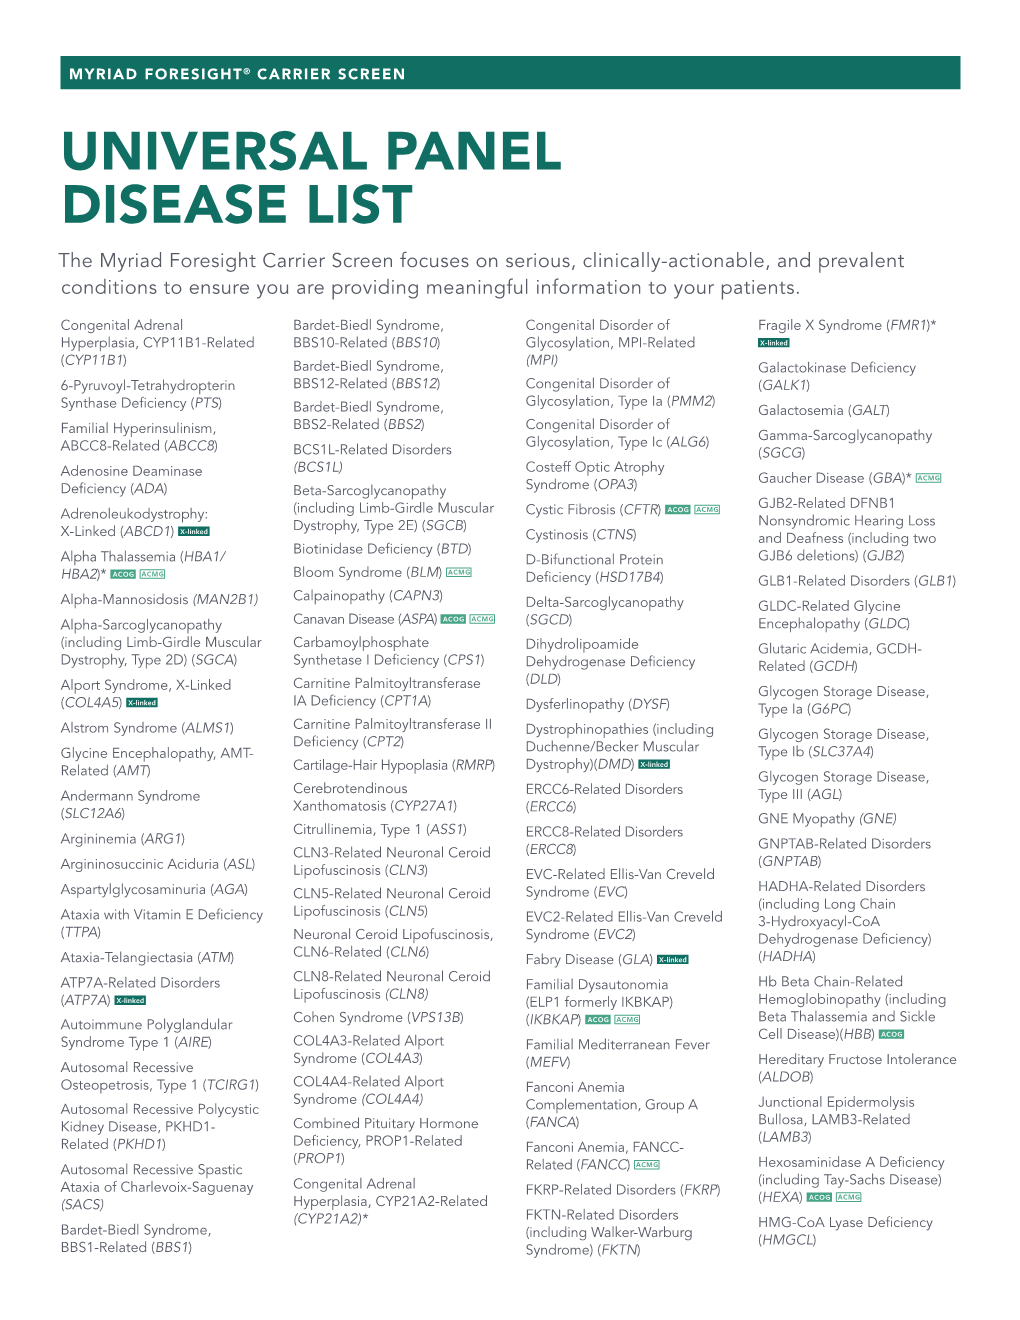 Universal Panel Disease List